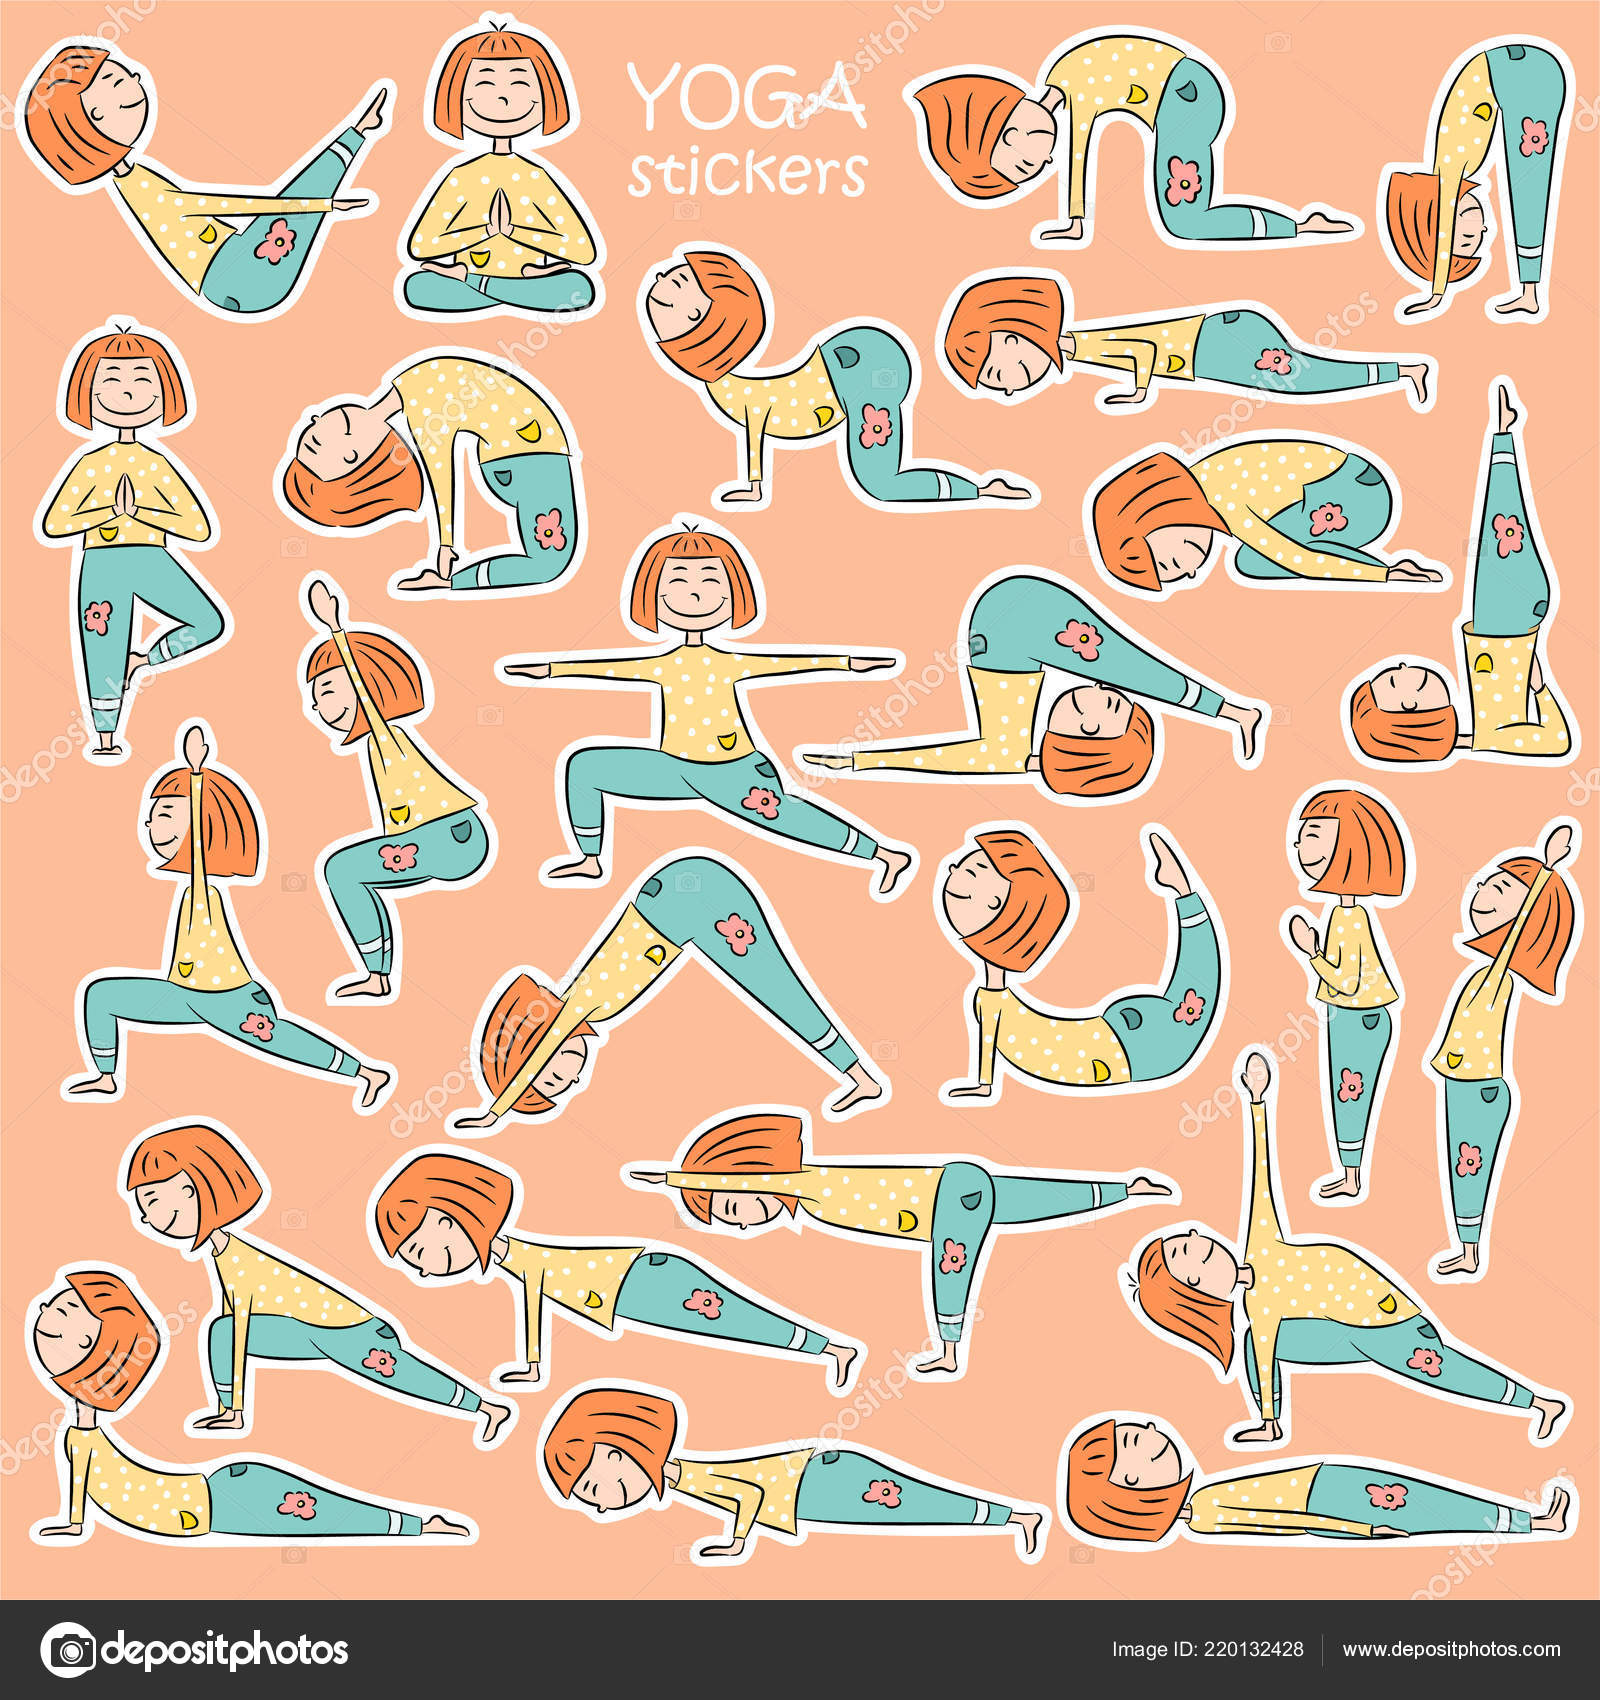 https://st4.depositphotos.com/7912432/22013/v/1600/depositphotos_220132428-stock-illustration-kids-yoga-sticker-set-cute.jpg